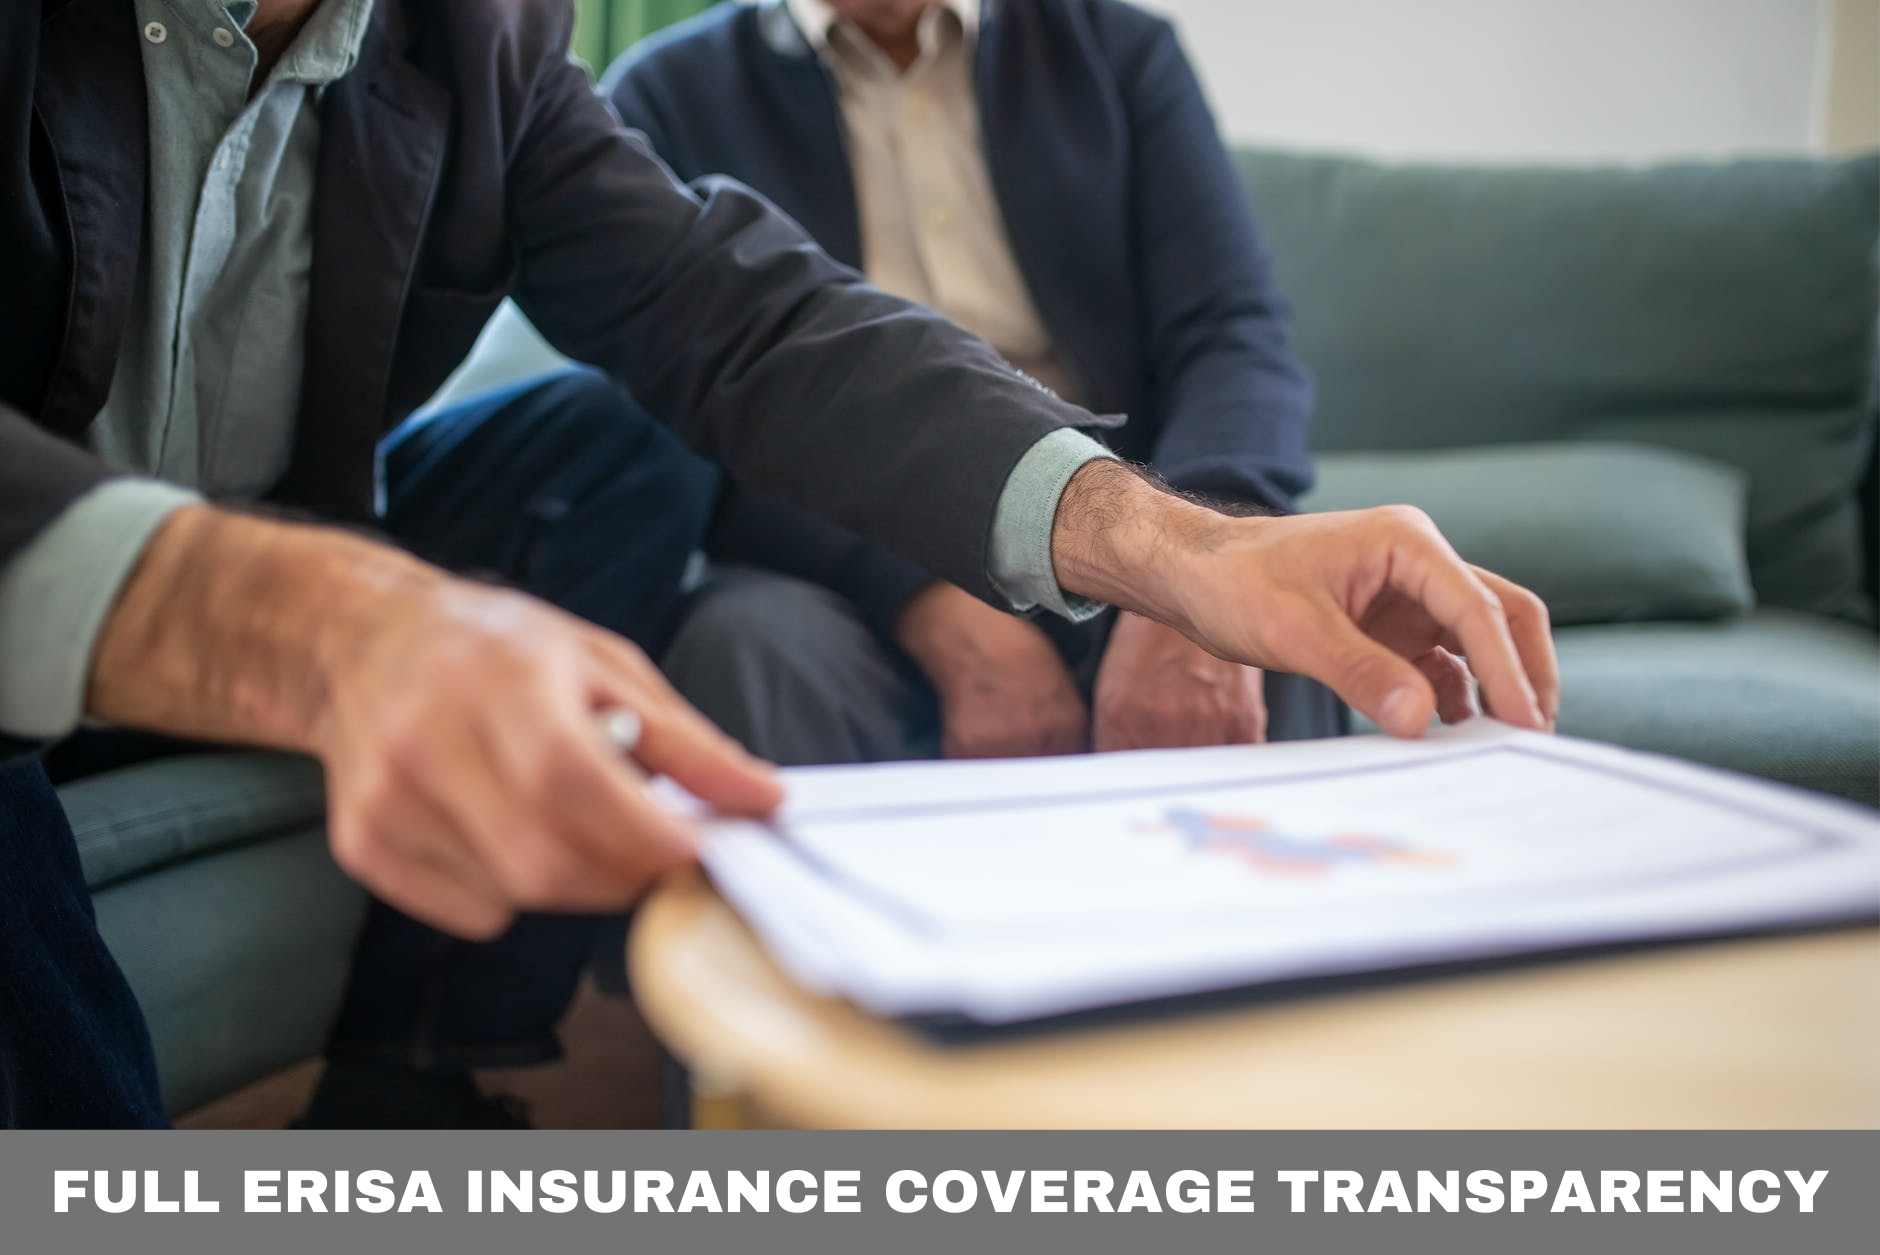 Purpose of ERISA Insurance Document